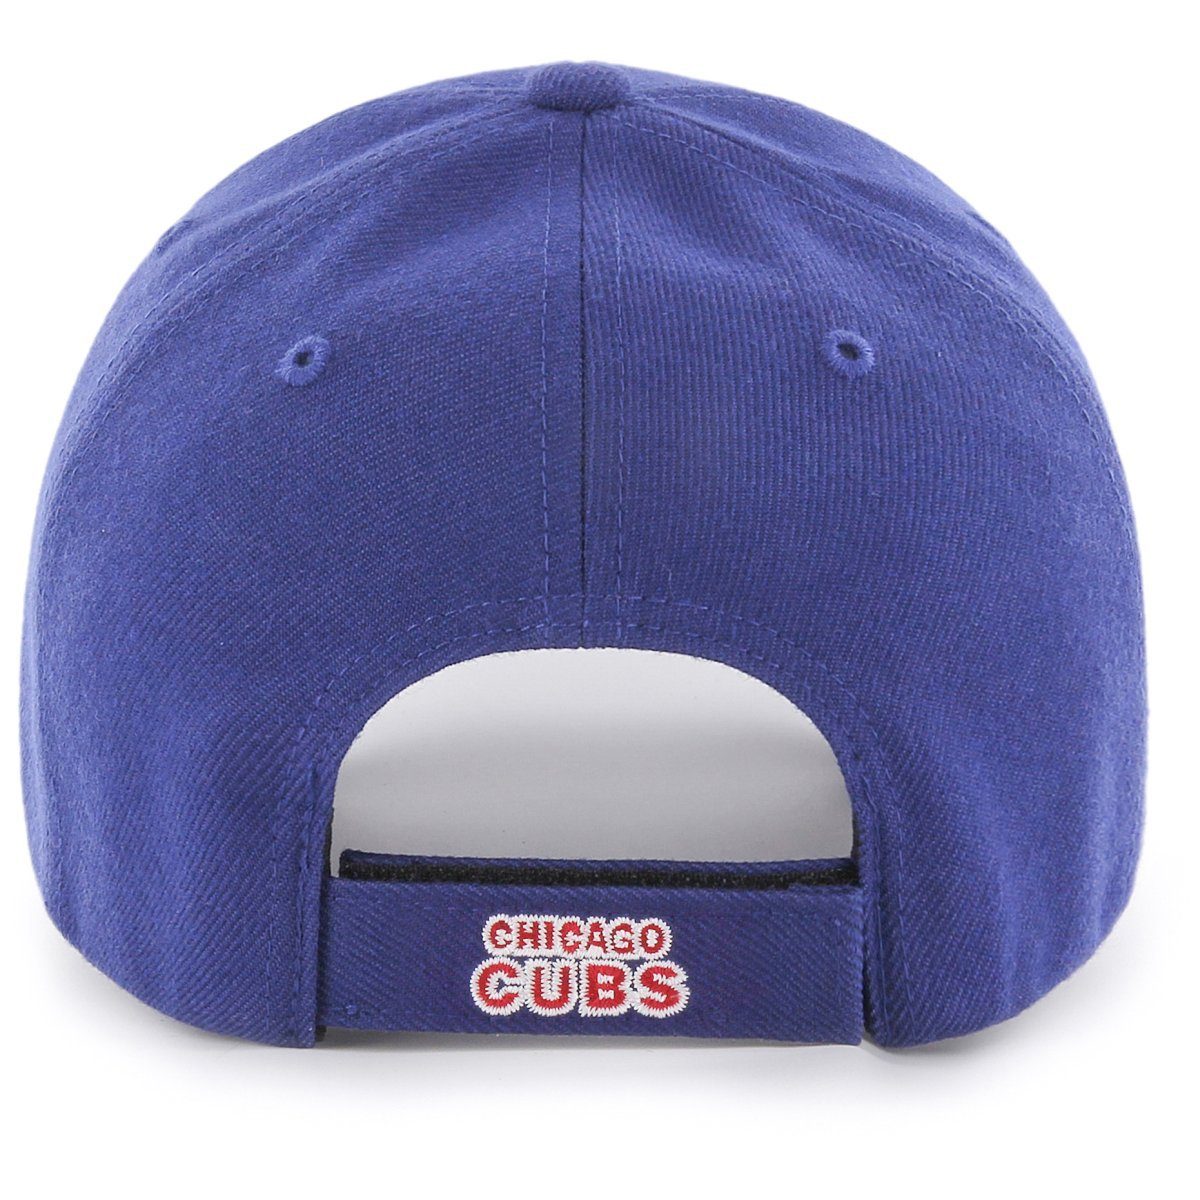 Cubs Cap Chicago MLB '47 Brand Baseball